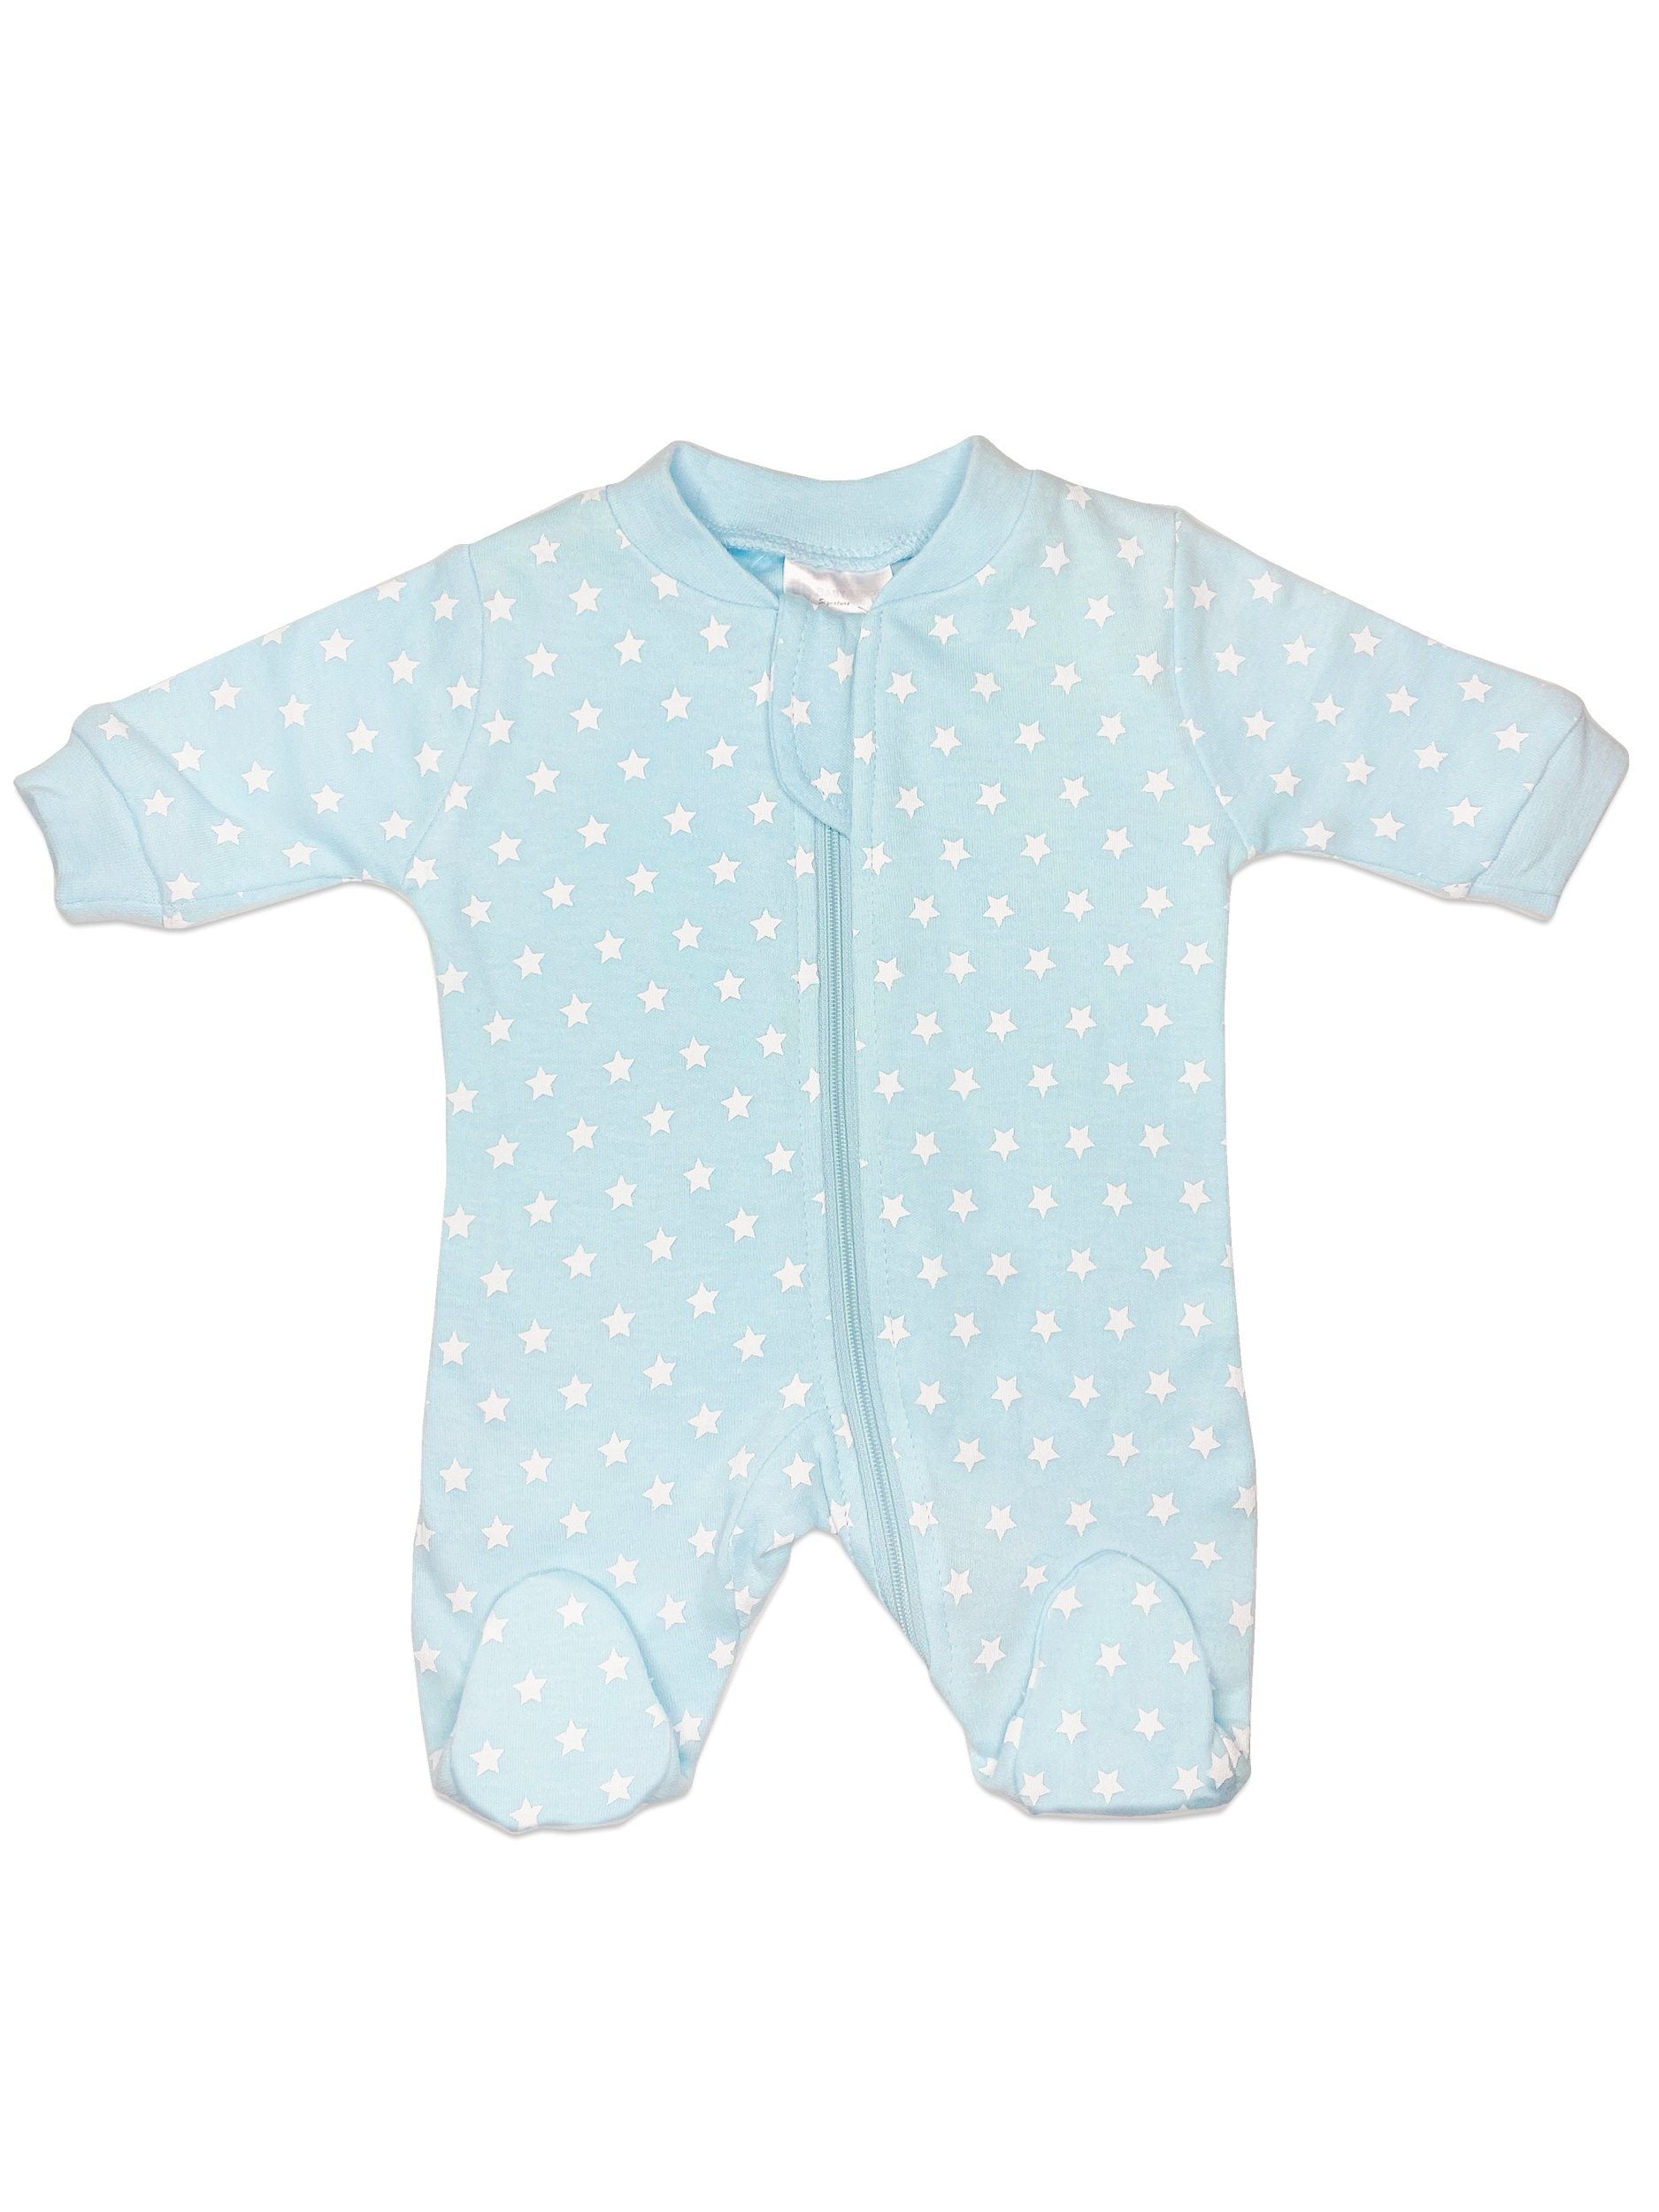 Blue Star Print Zip Up Footed Sleepsuit - Sleepsuit / Babygrow - Baby Mode